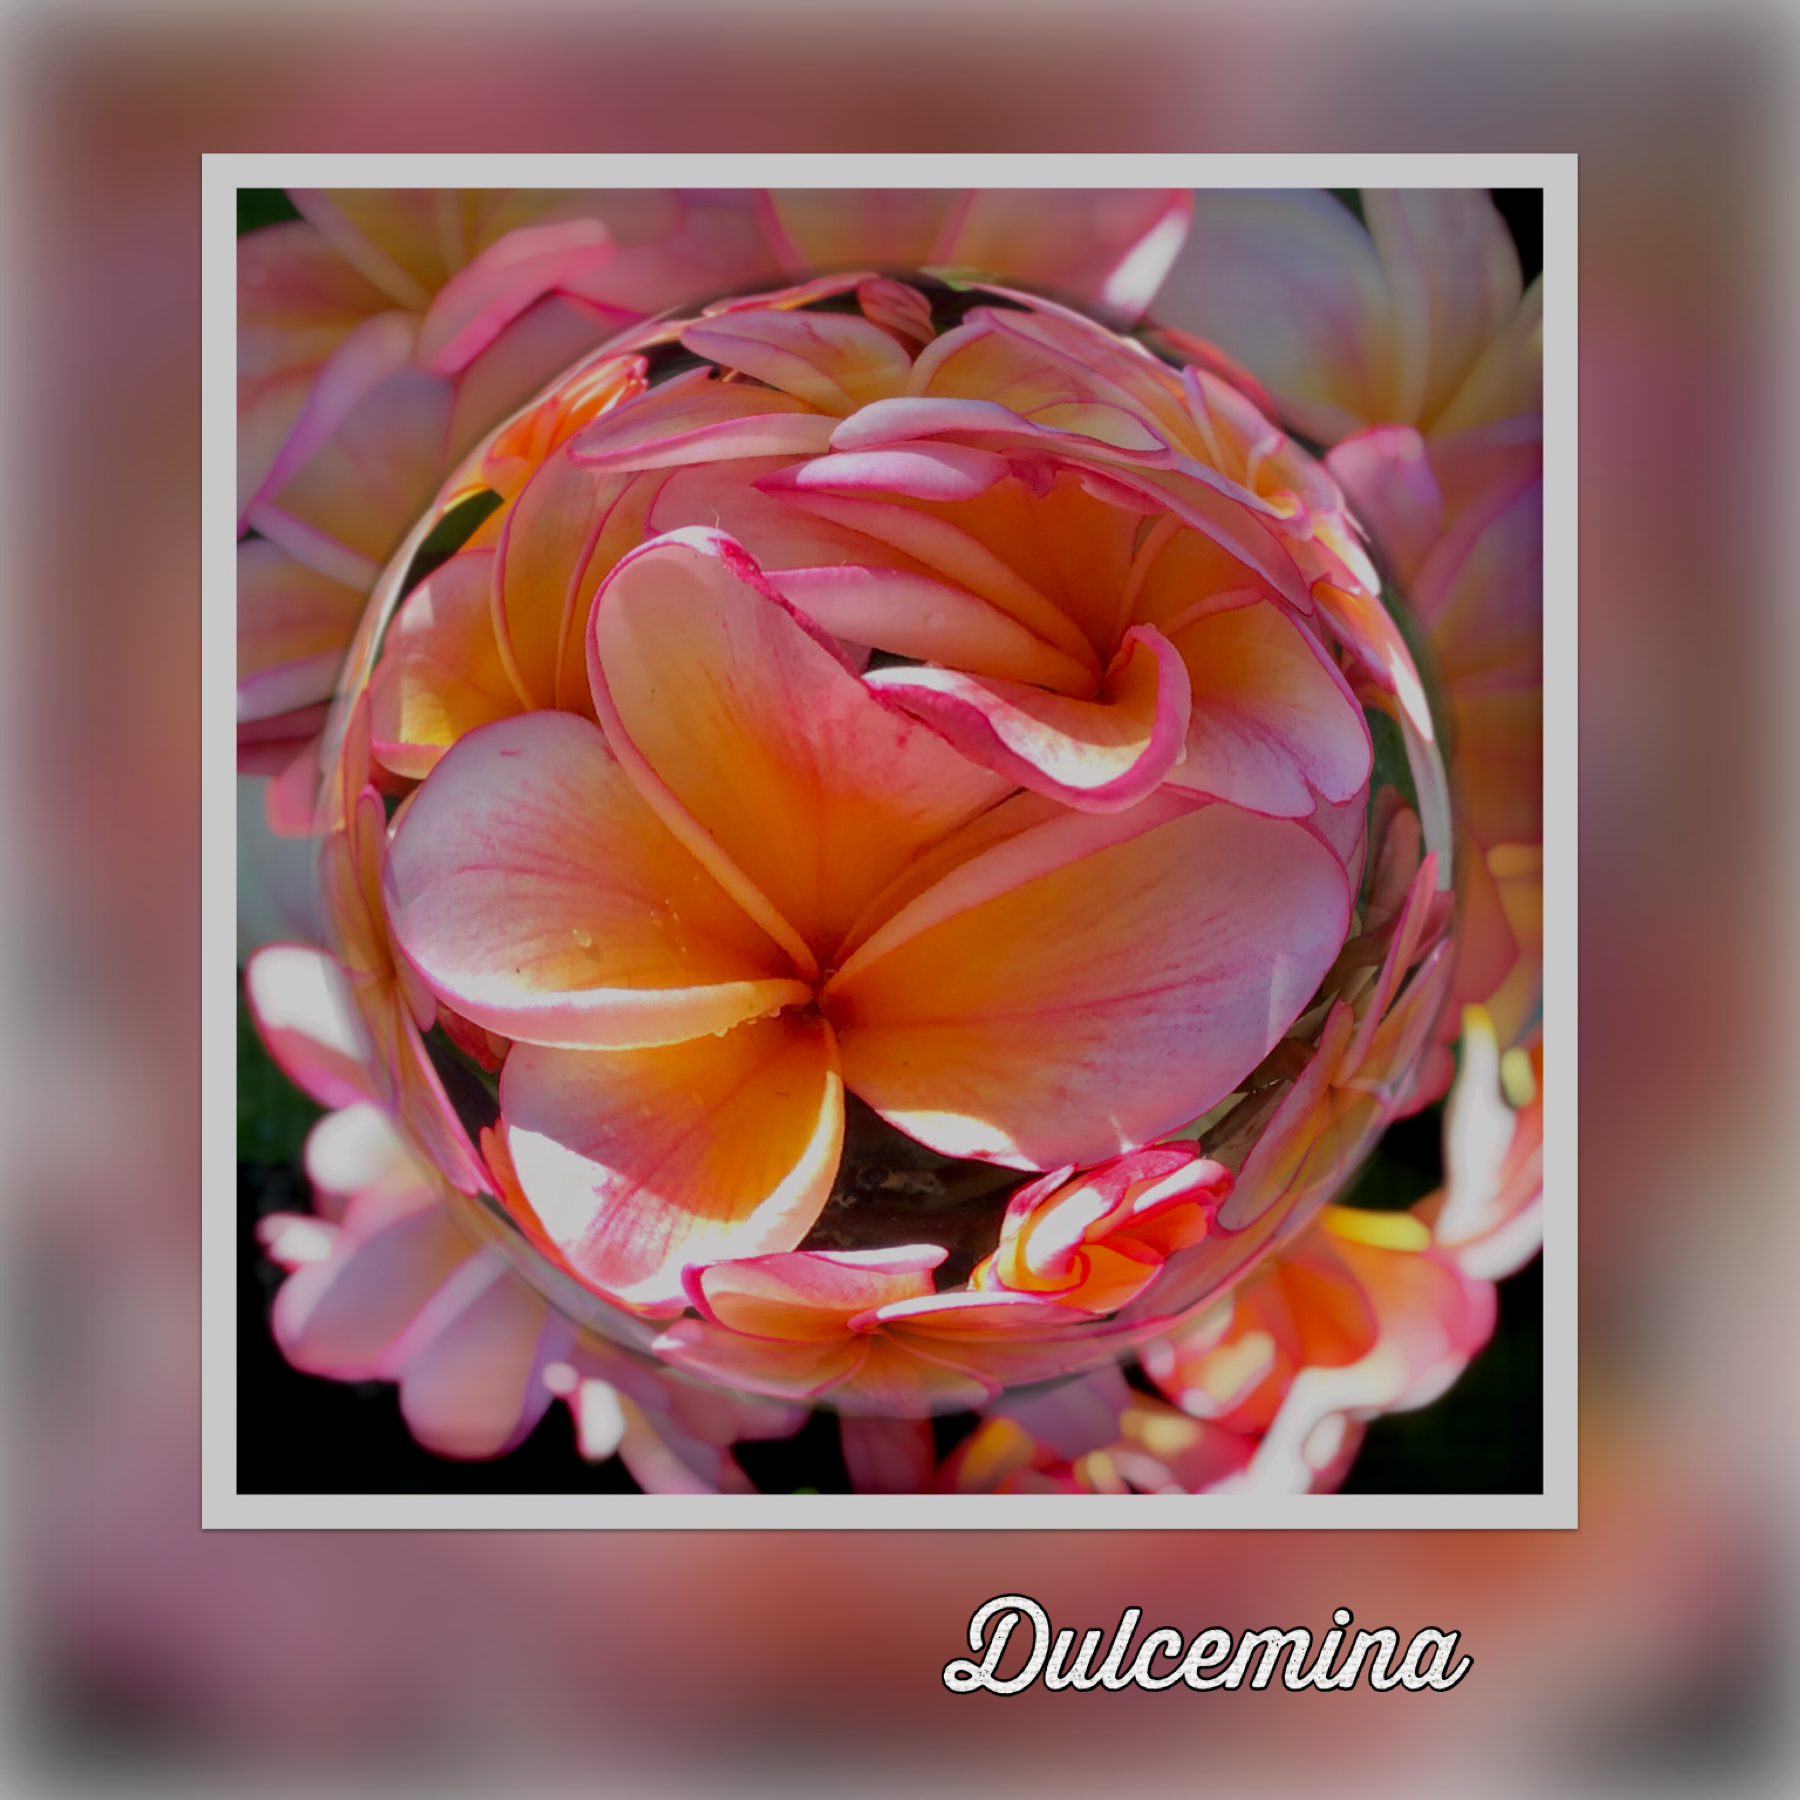 Dulcemina 
Plumeria